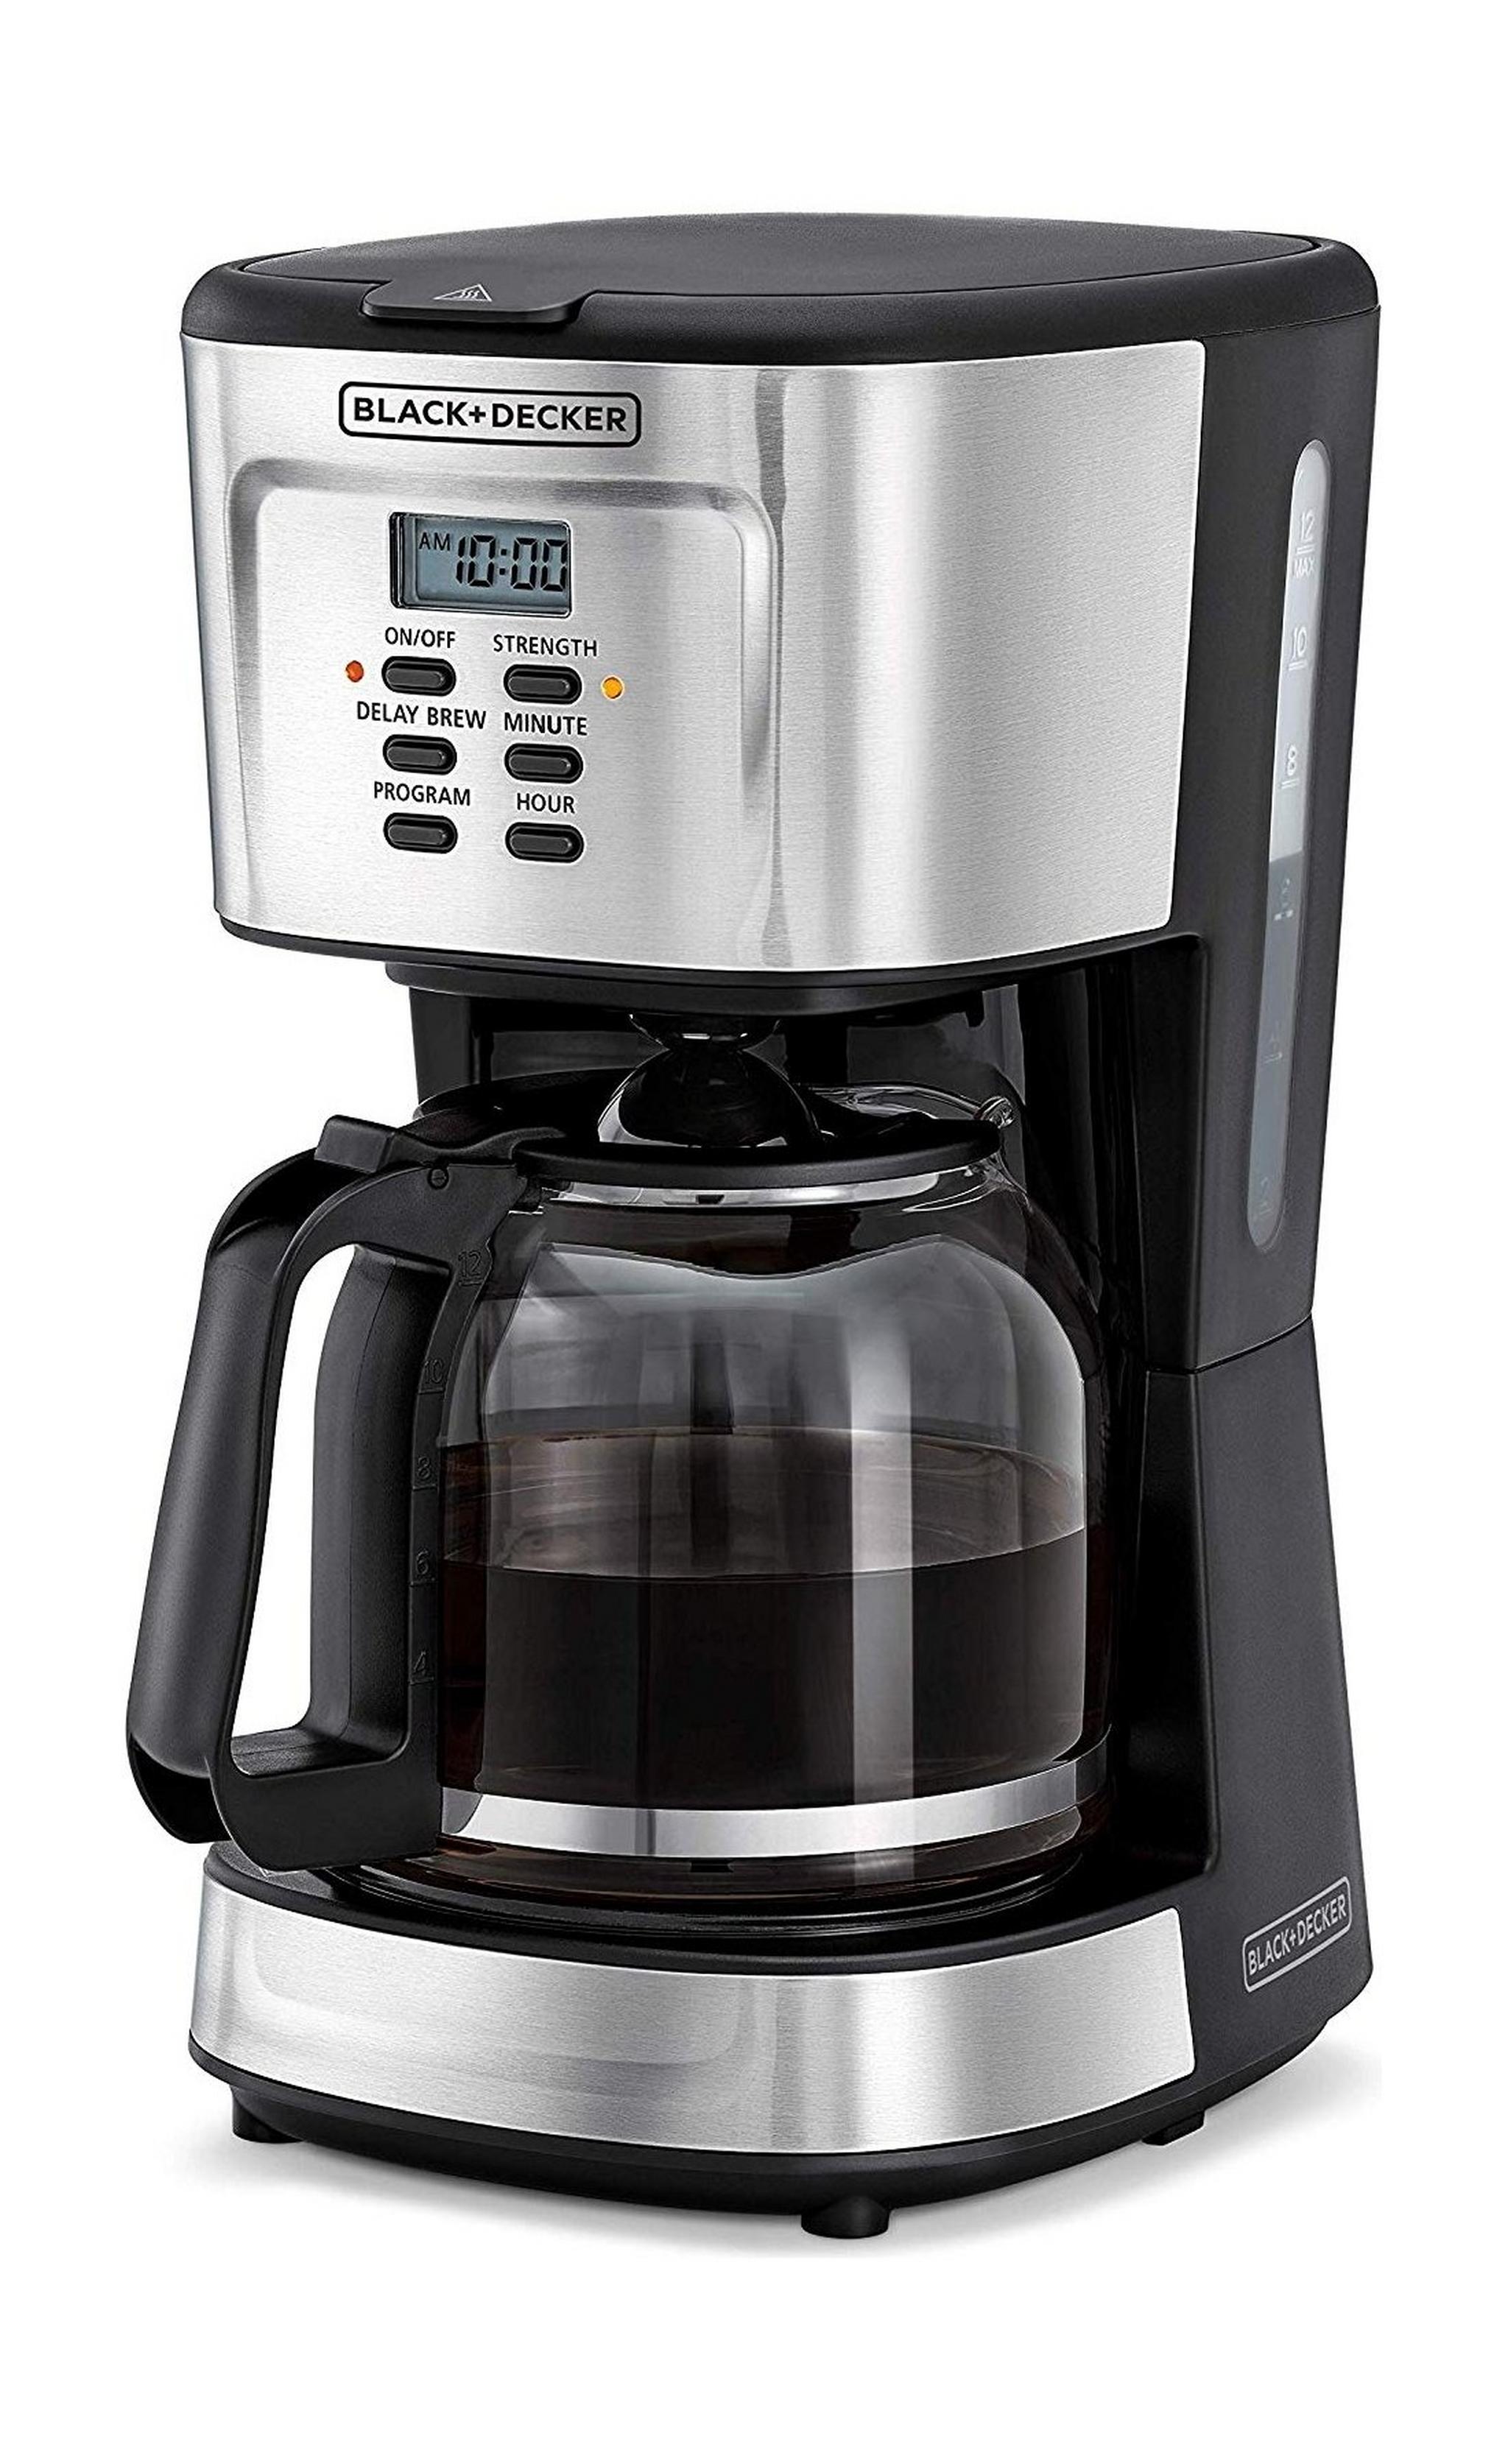 Black + Decker Drip Coffee Maker - 900W (DCM85-B5) Silver/Black